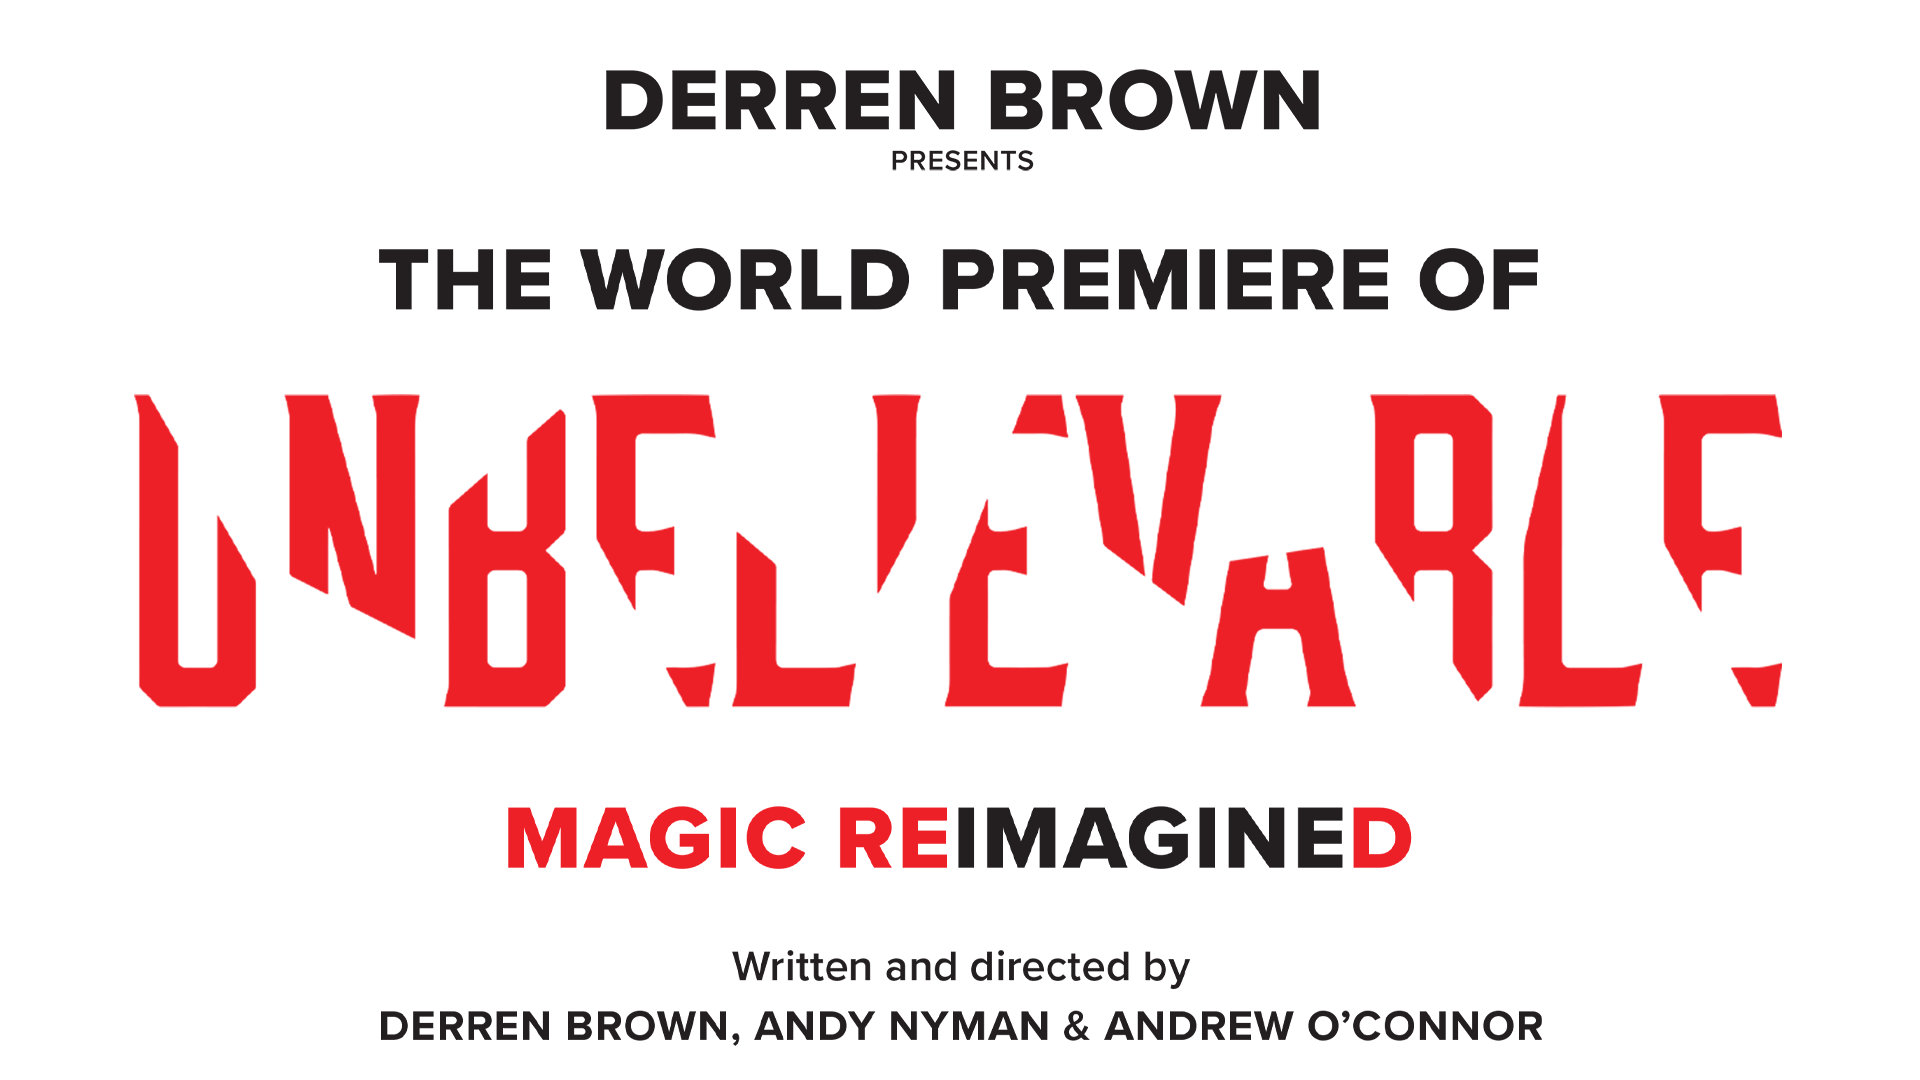 derren brown tour 2023 review